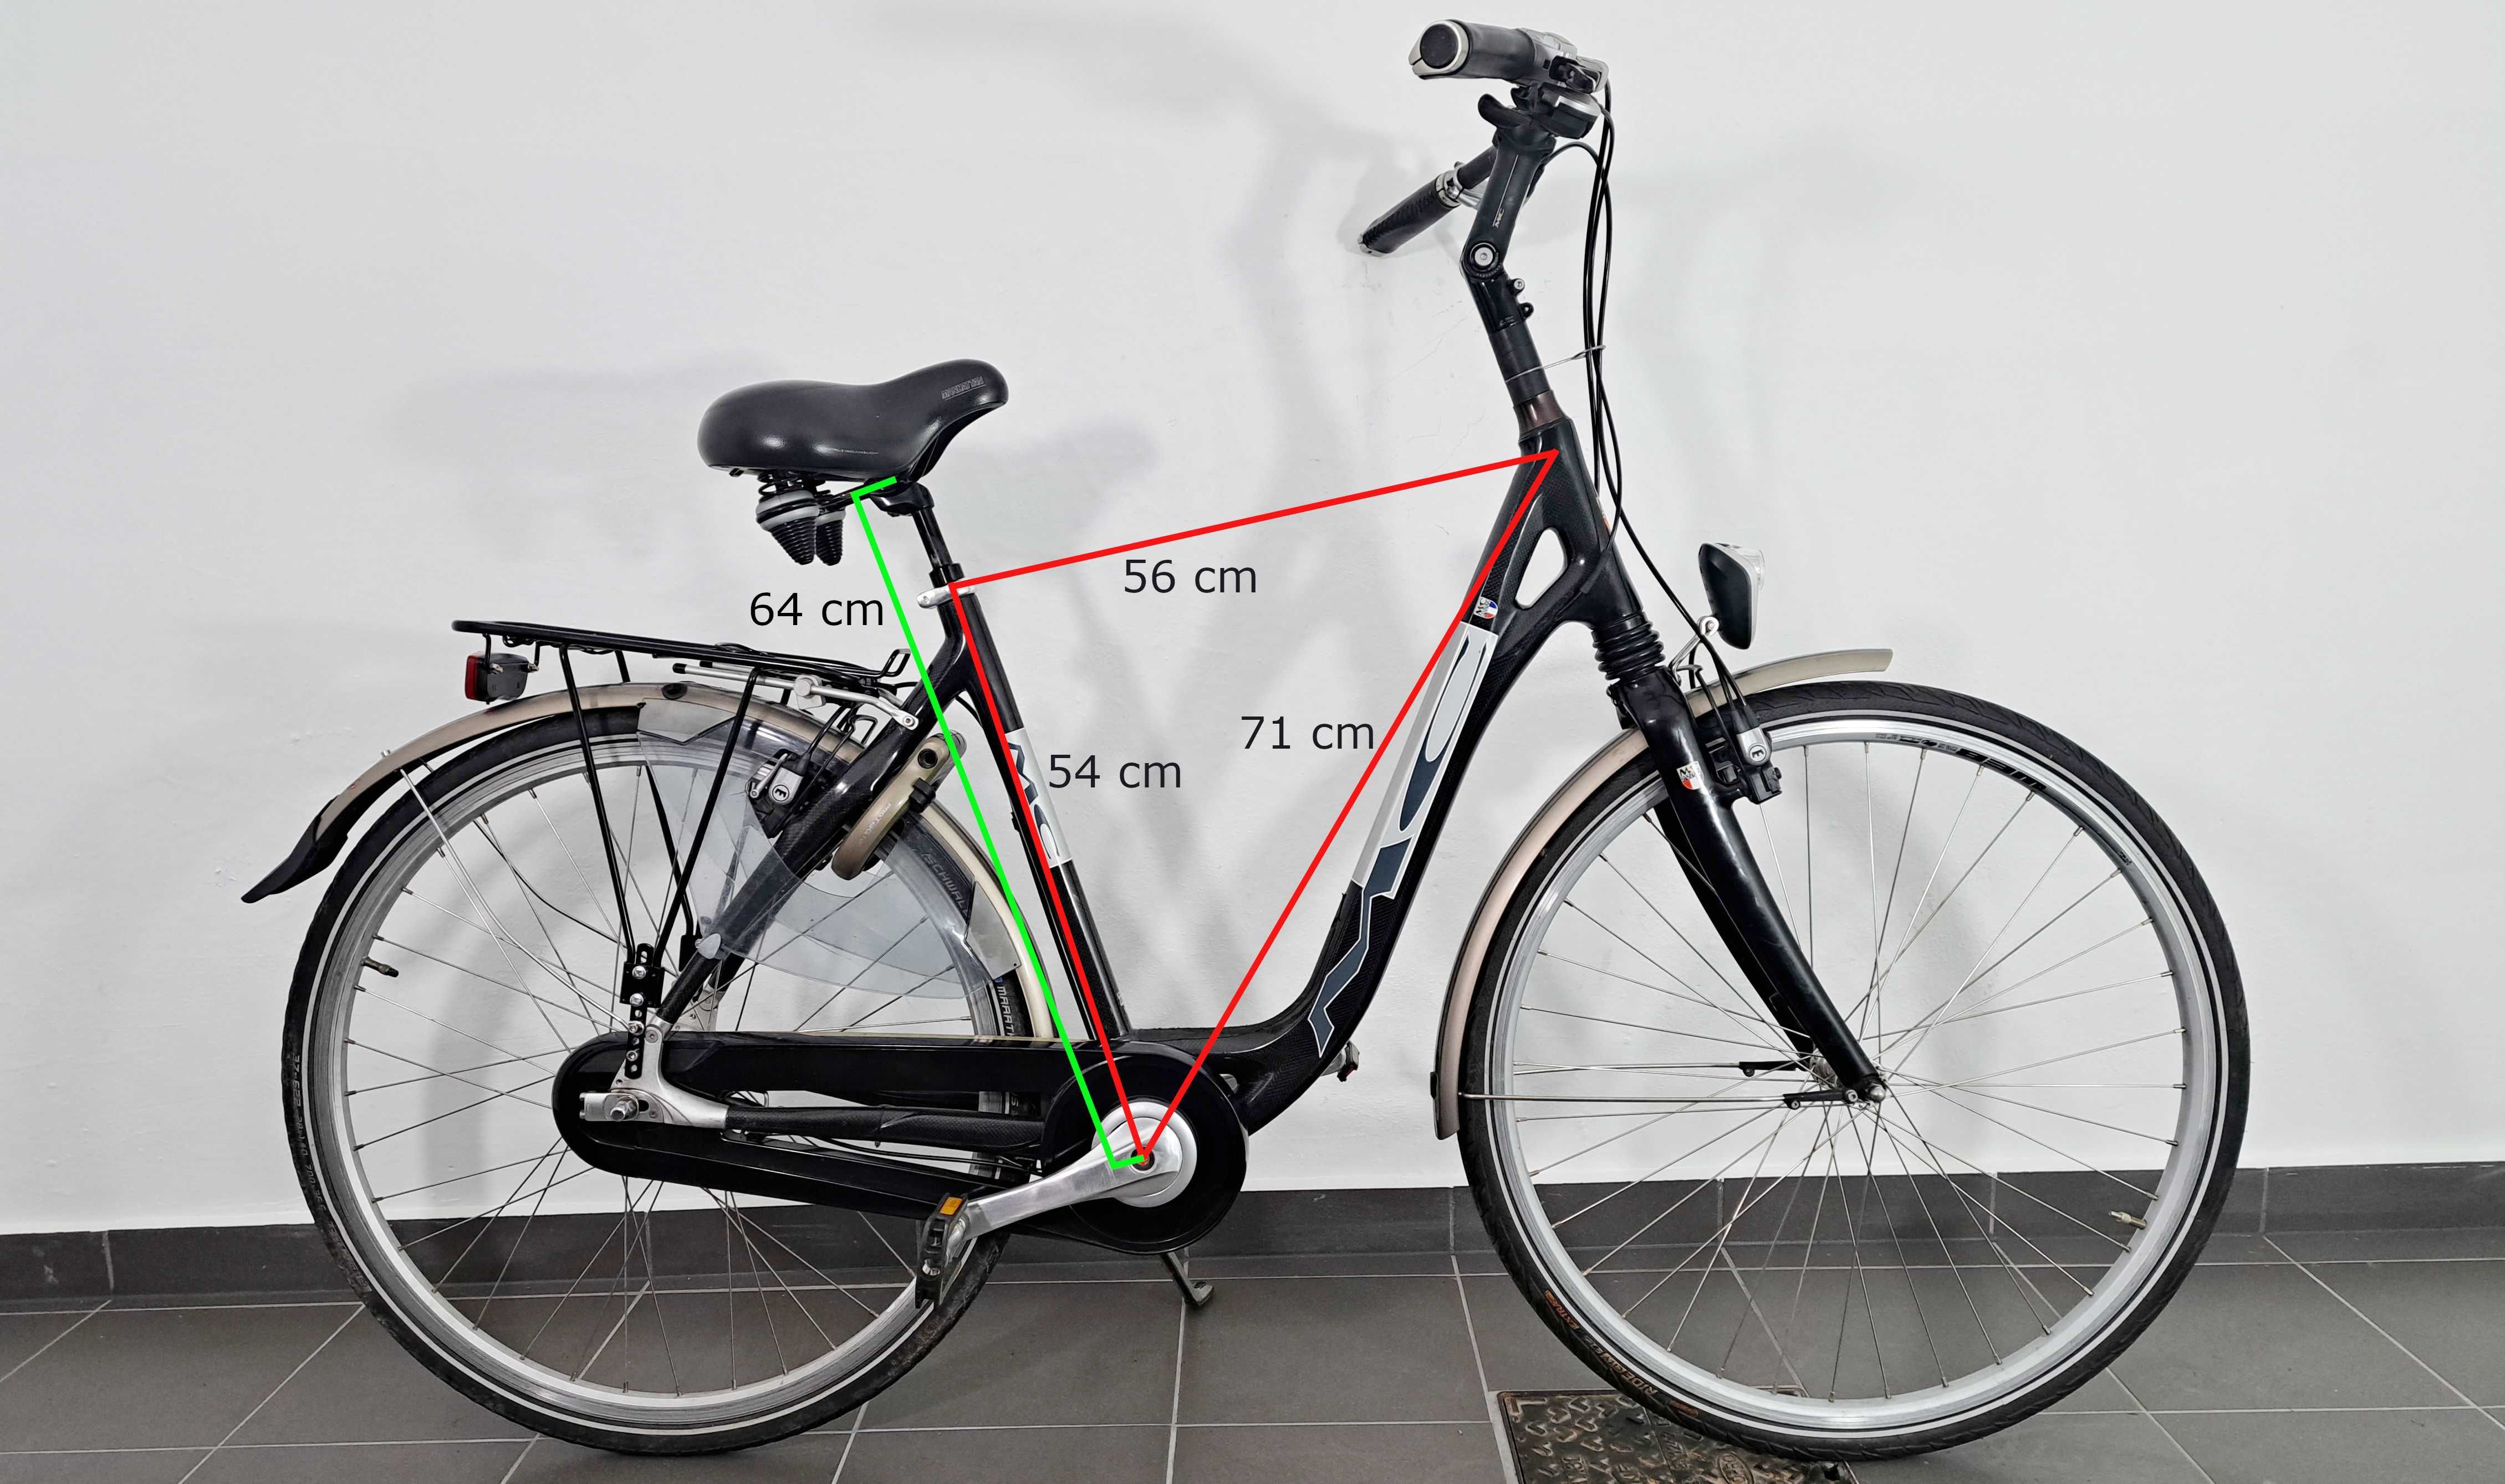 Rower Mc multicycle karbon karbonowy damka miejski 28 cali super stan!